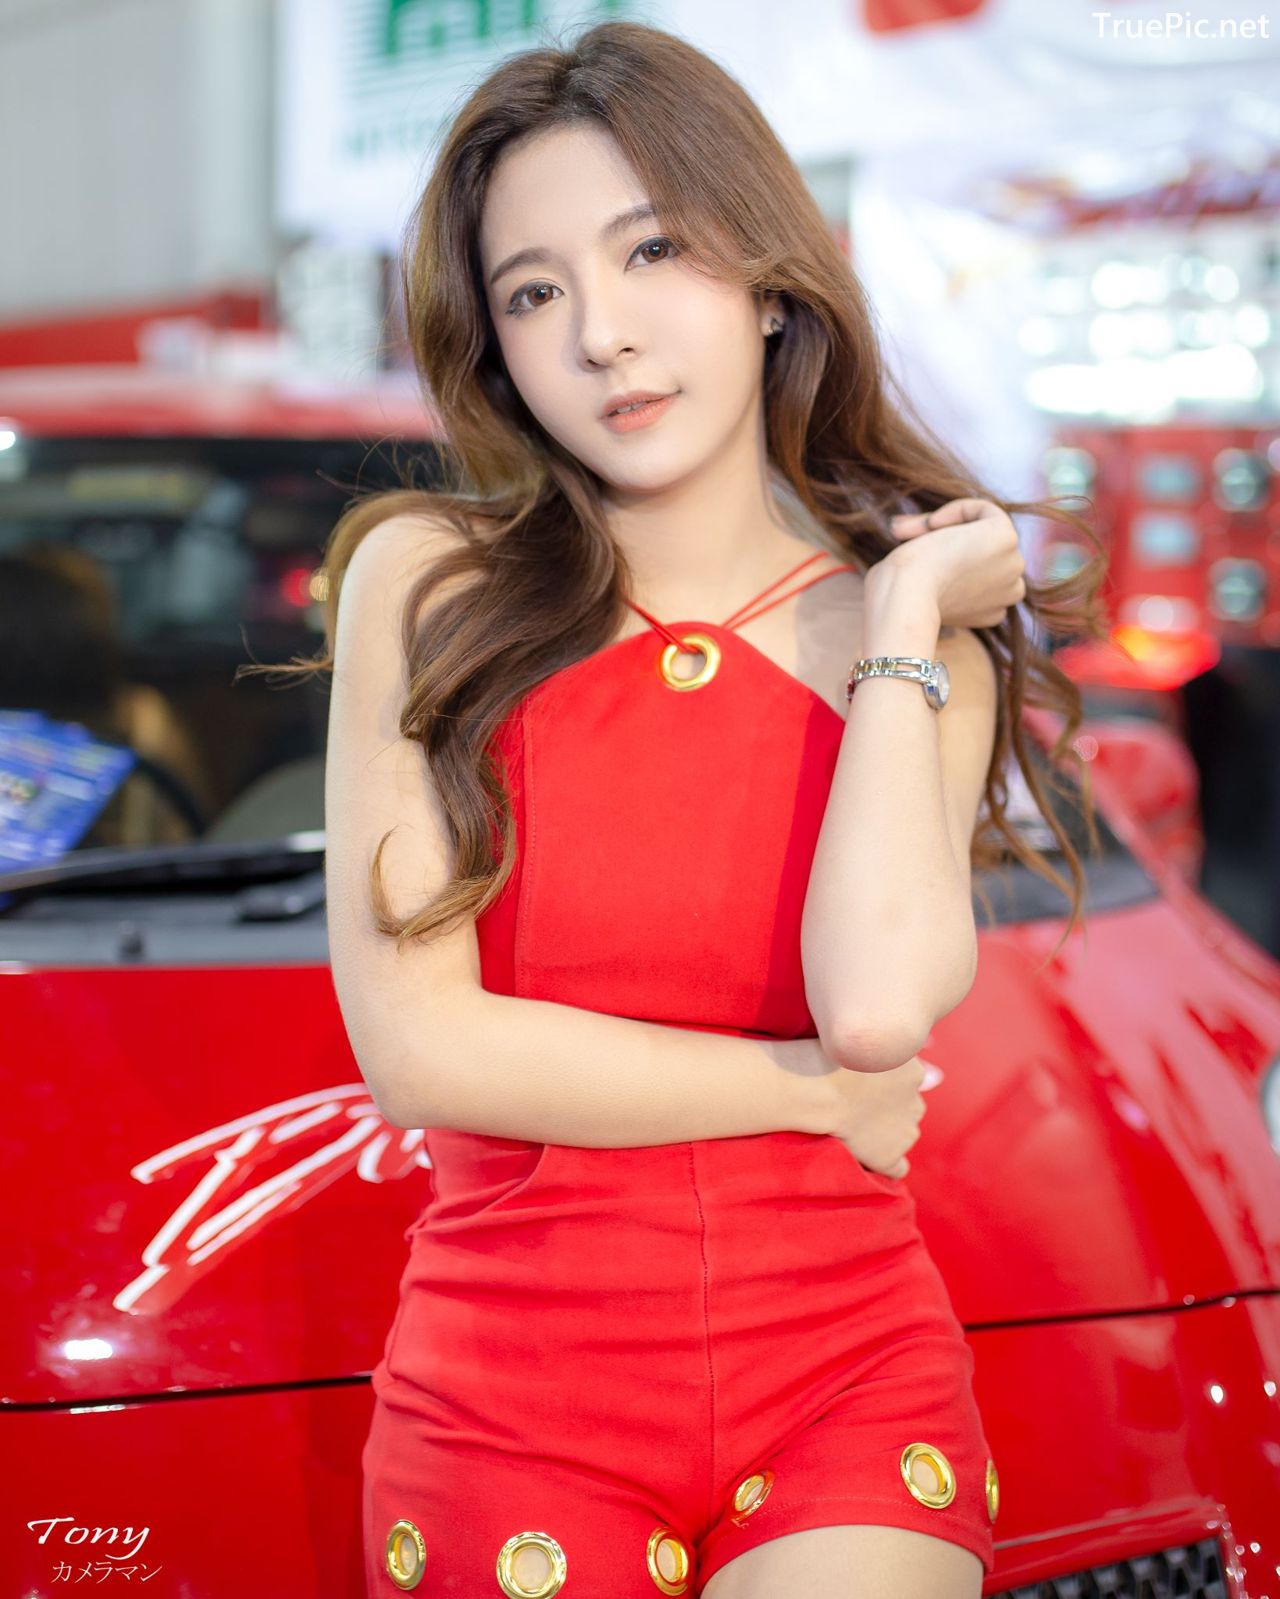 Image-Thailand-Hot-Model-Thai-Racing-Girl-At-Big-Motor-2018-TruePic.net- Picture-33